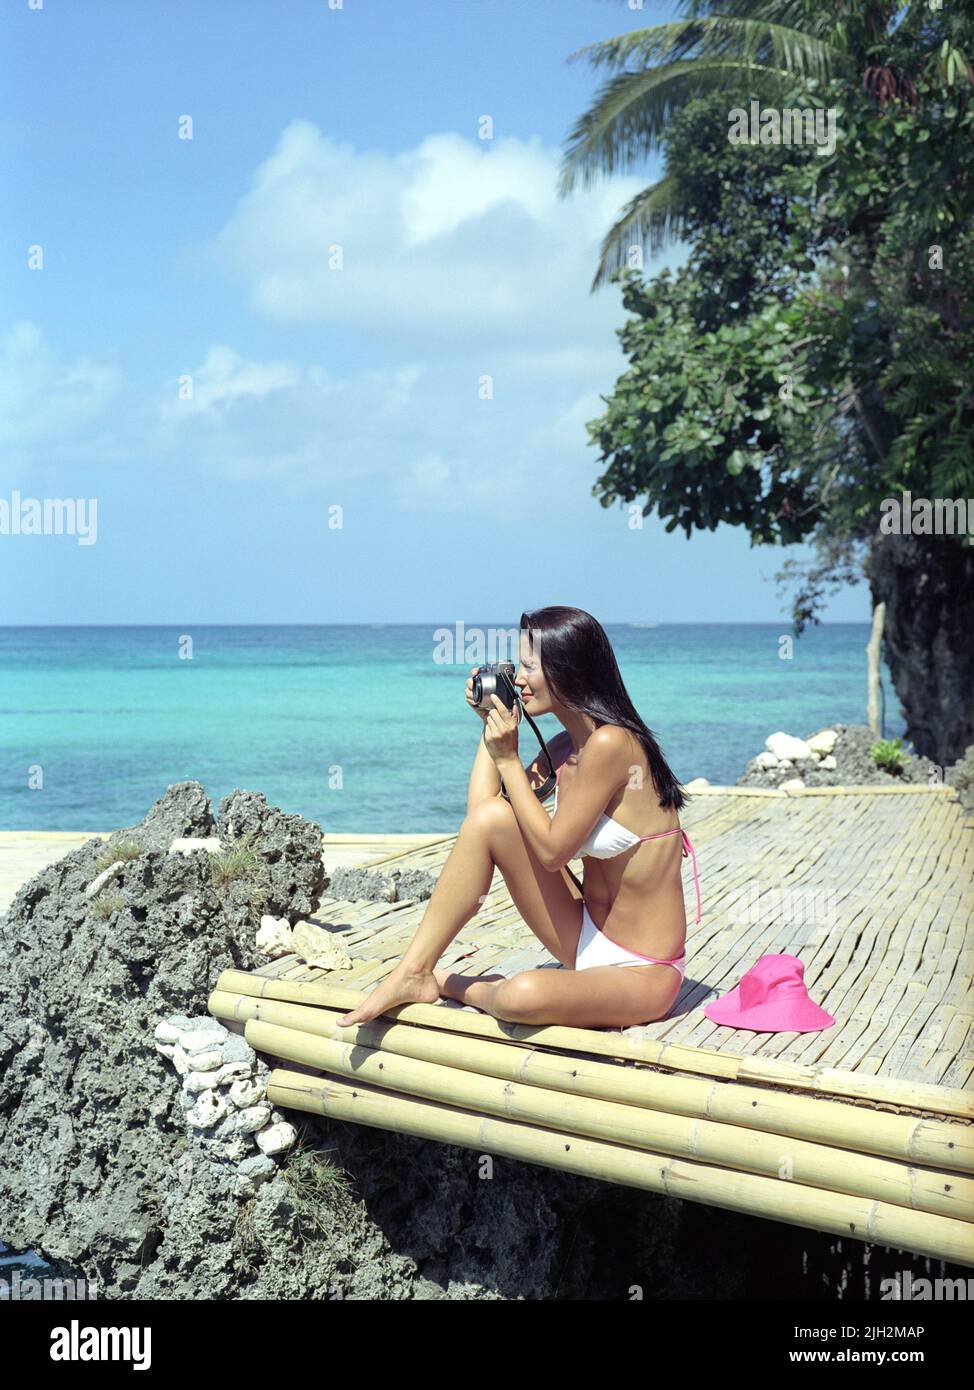 Woman in bikini taking a picture on a bamboo dock. Boracay, Philippines. Stock Photo